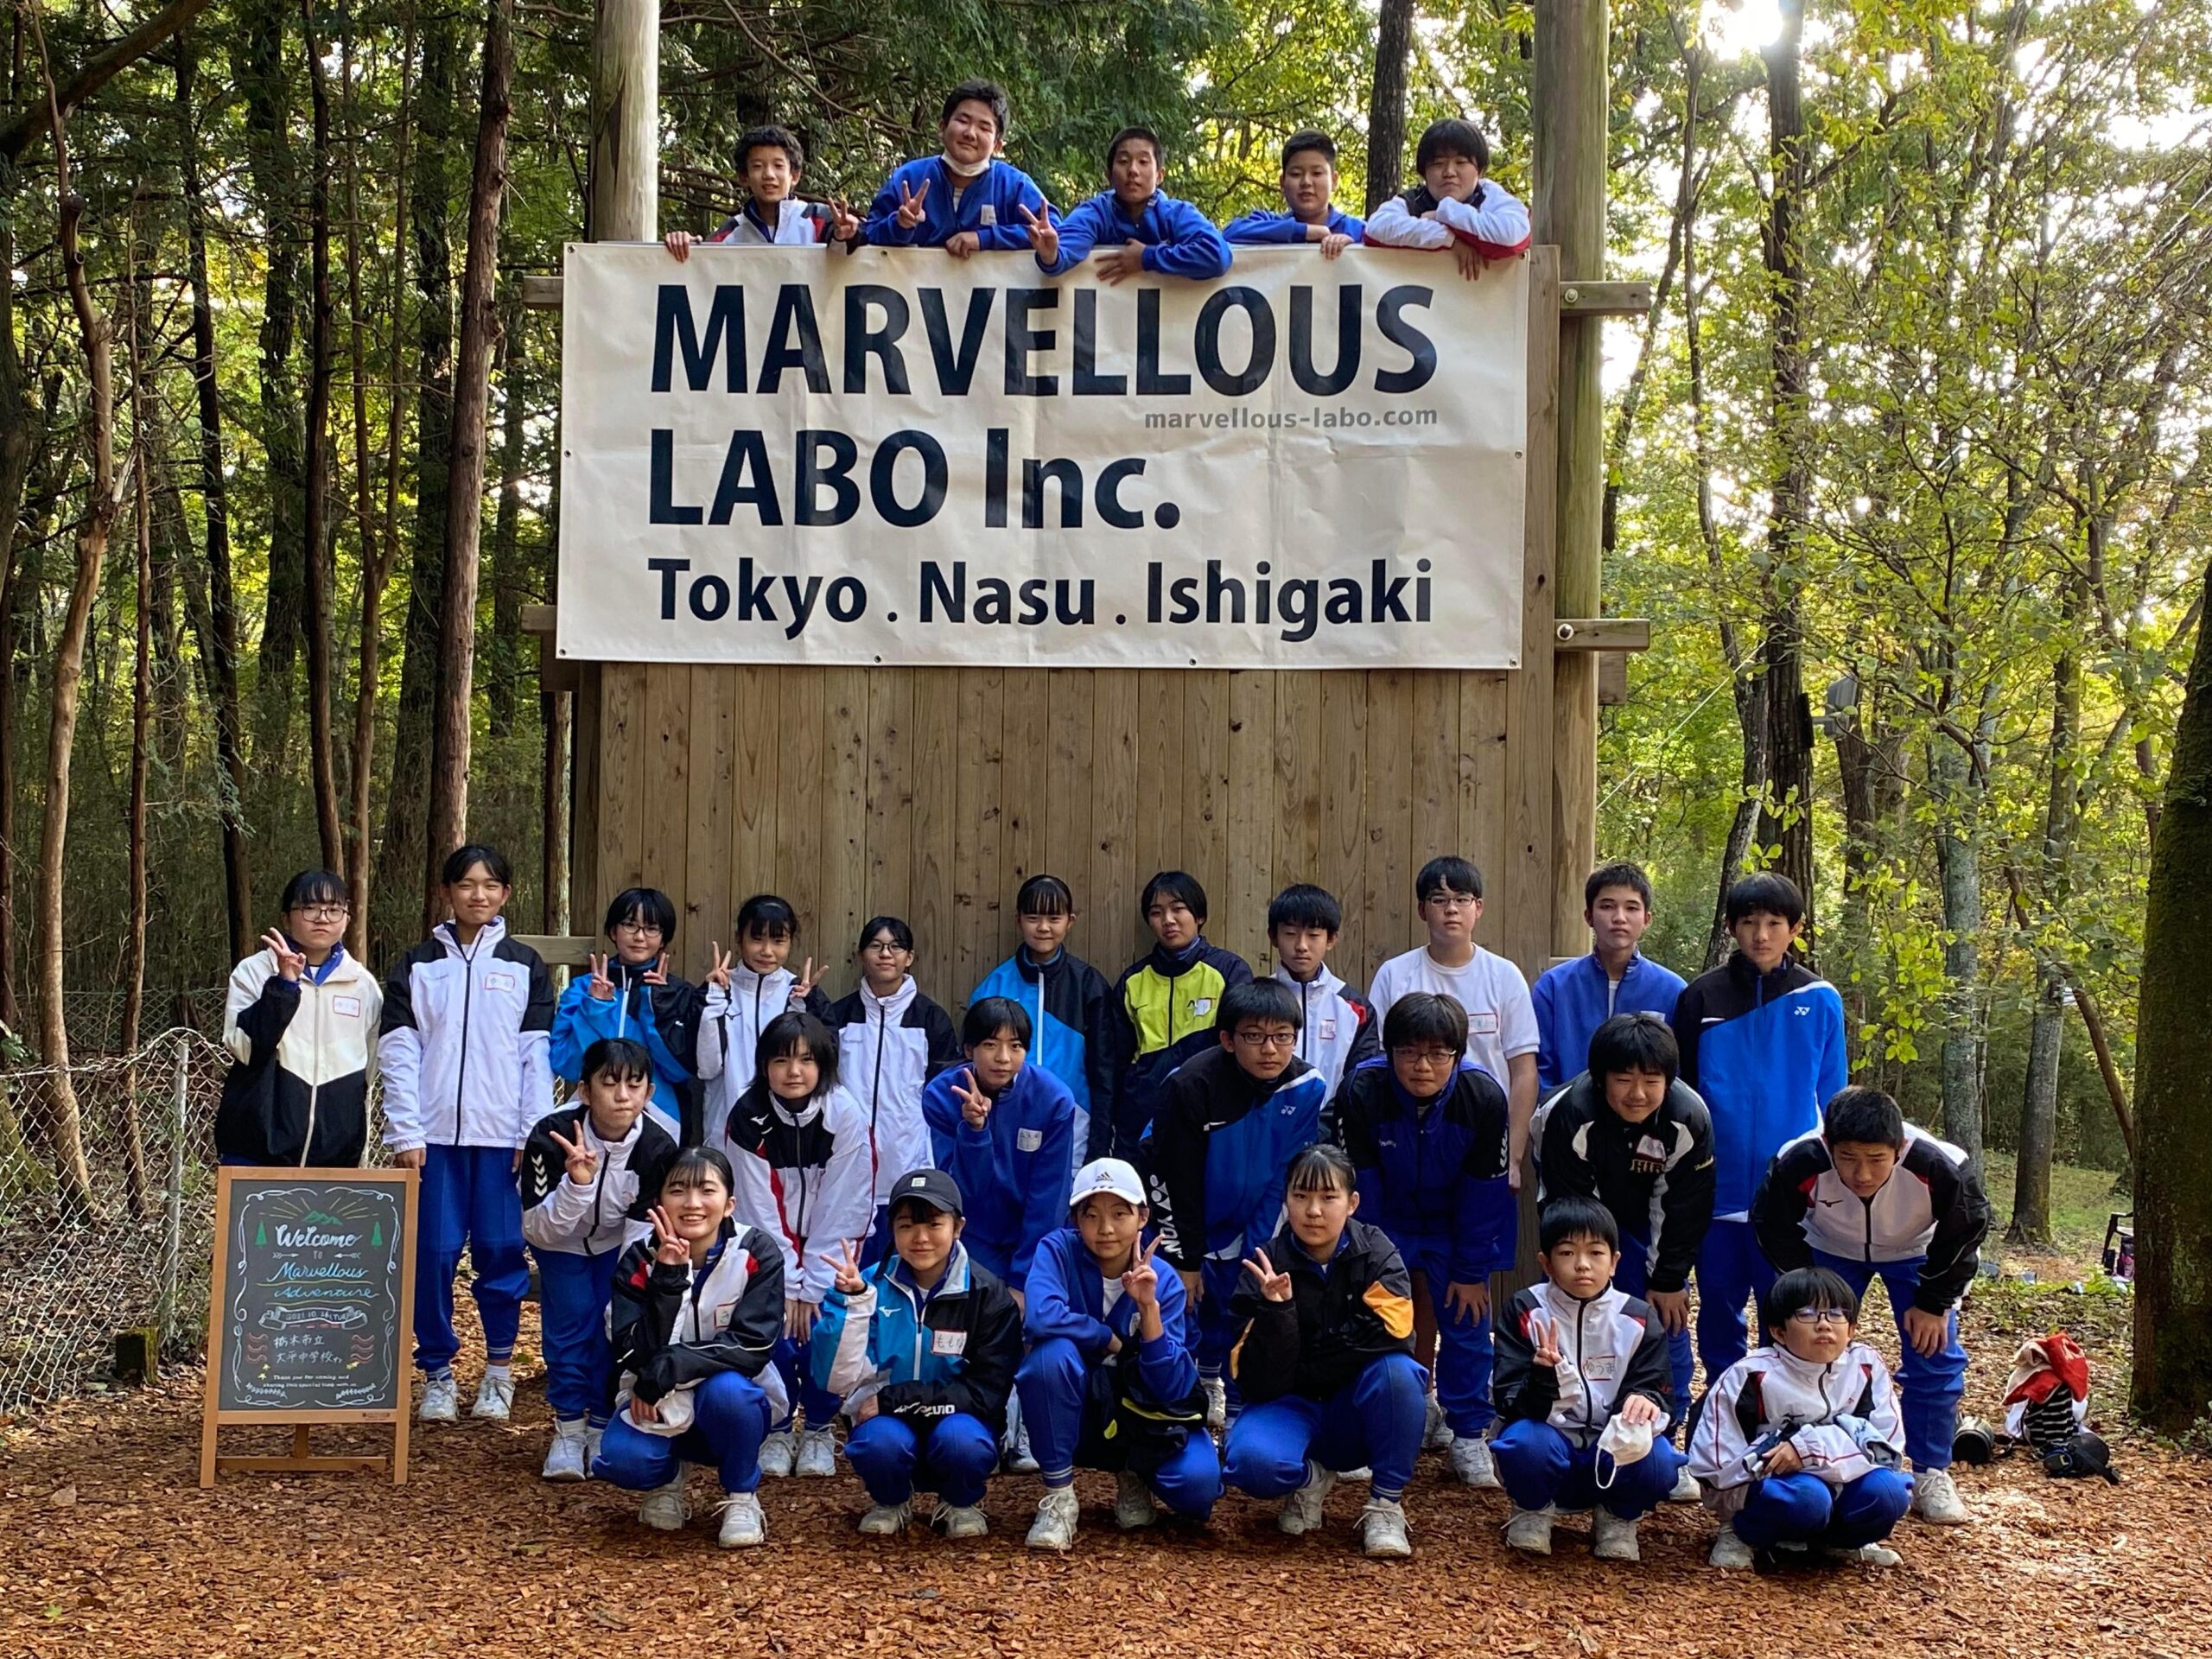 「MARVELLOUS LABO」の旗を取り付けた木製の壁の前に整列する参加者たち（栃木市立大平中学校03）